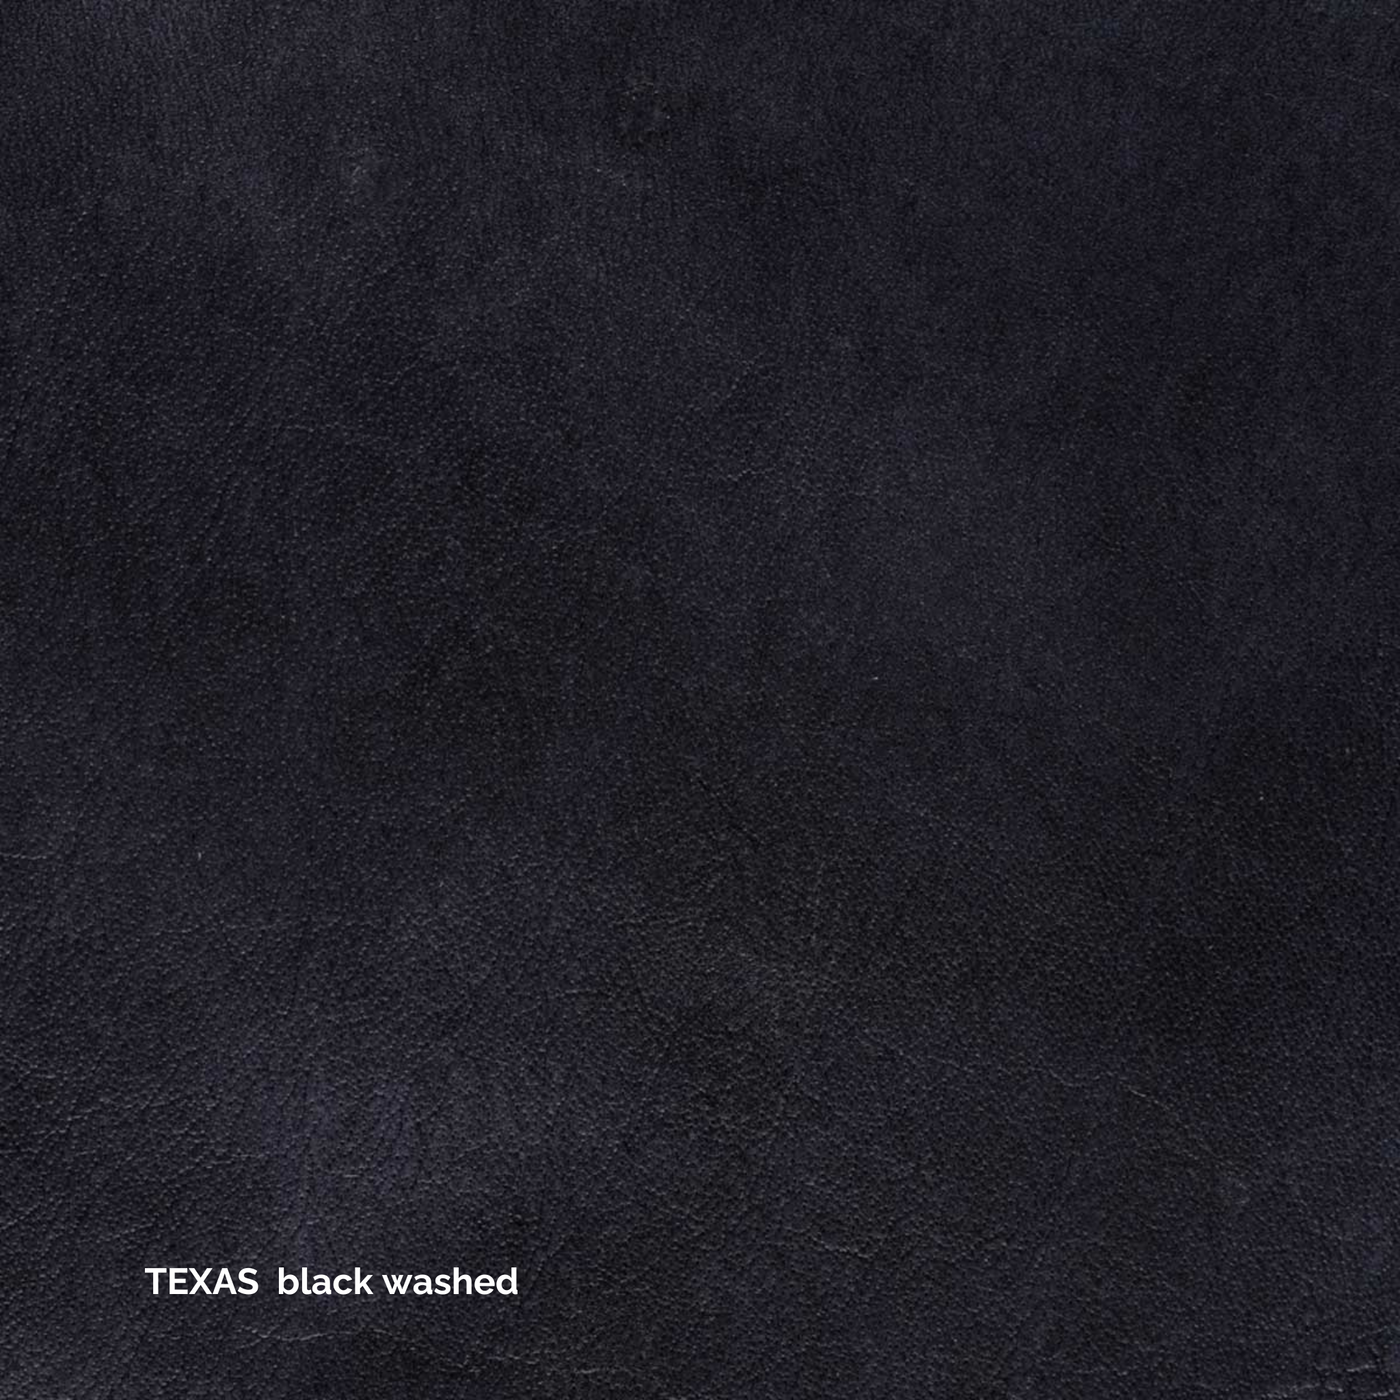 Olli - Stuhl mit Armlehne - Leder Texas Black Washed